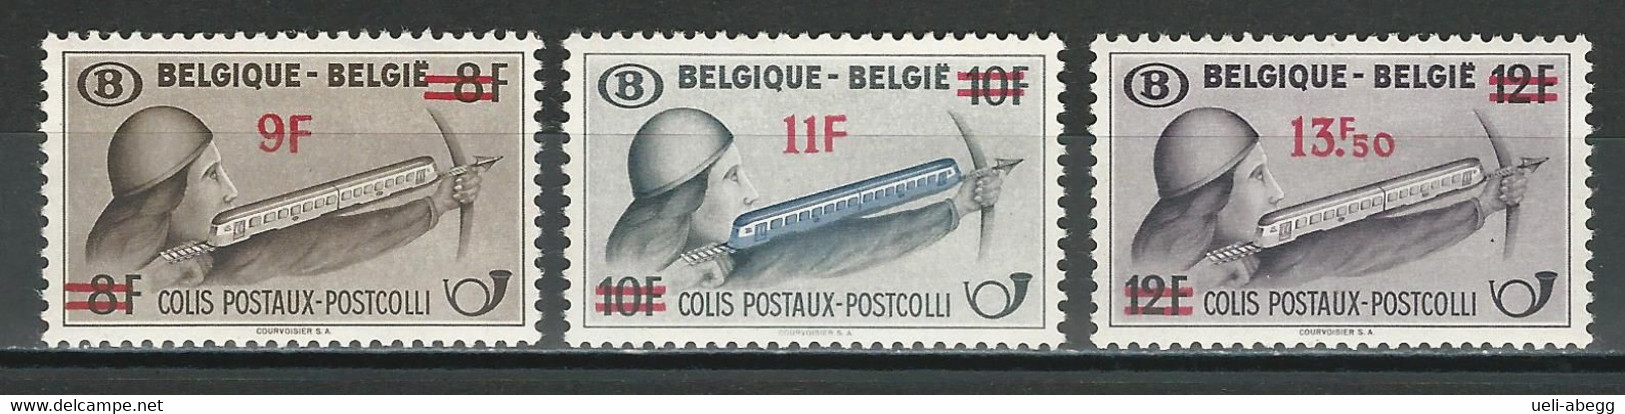 Belgien Mi Postpak 24-26  ** MNH - Reisgoedzegels [BA]